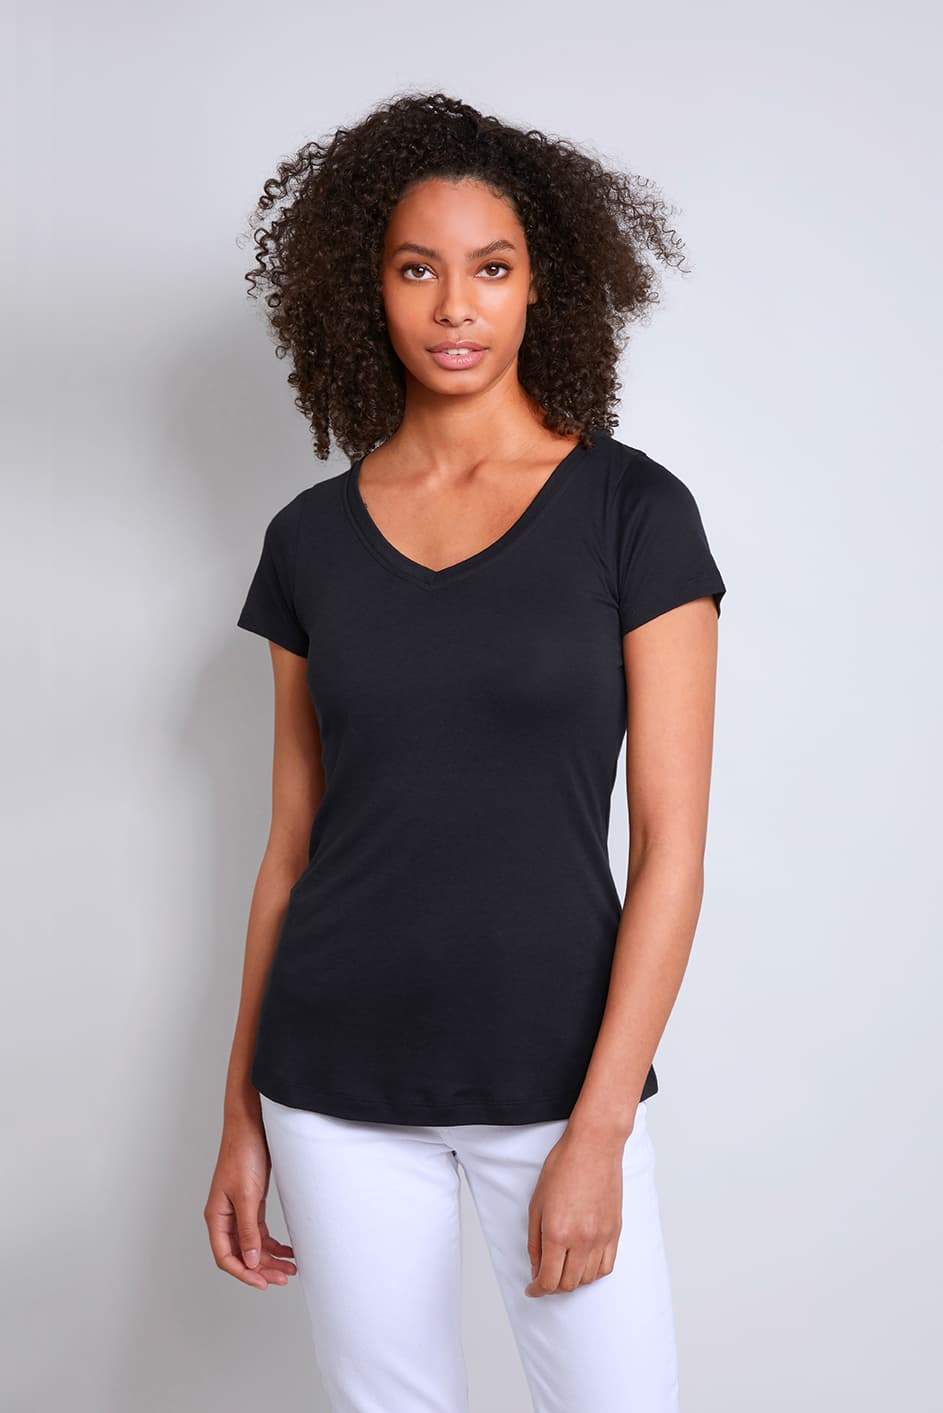 Women's Short Sleeve V-Neck - High Quality Comfortable V-Neck T-Shirt - Flattering Short Sleeve T-Shirt - Soft Black Short Sleeve V-Neck T-Shirt - Lavender Hill Clothing 